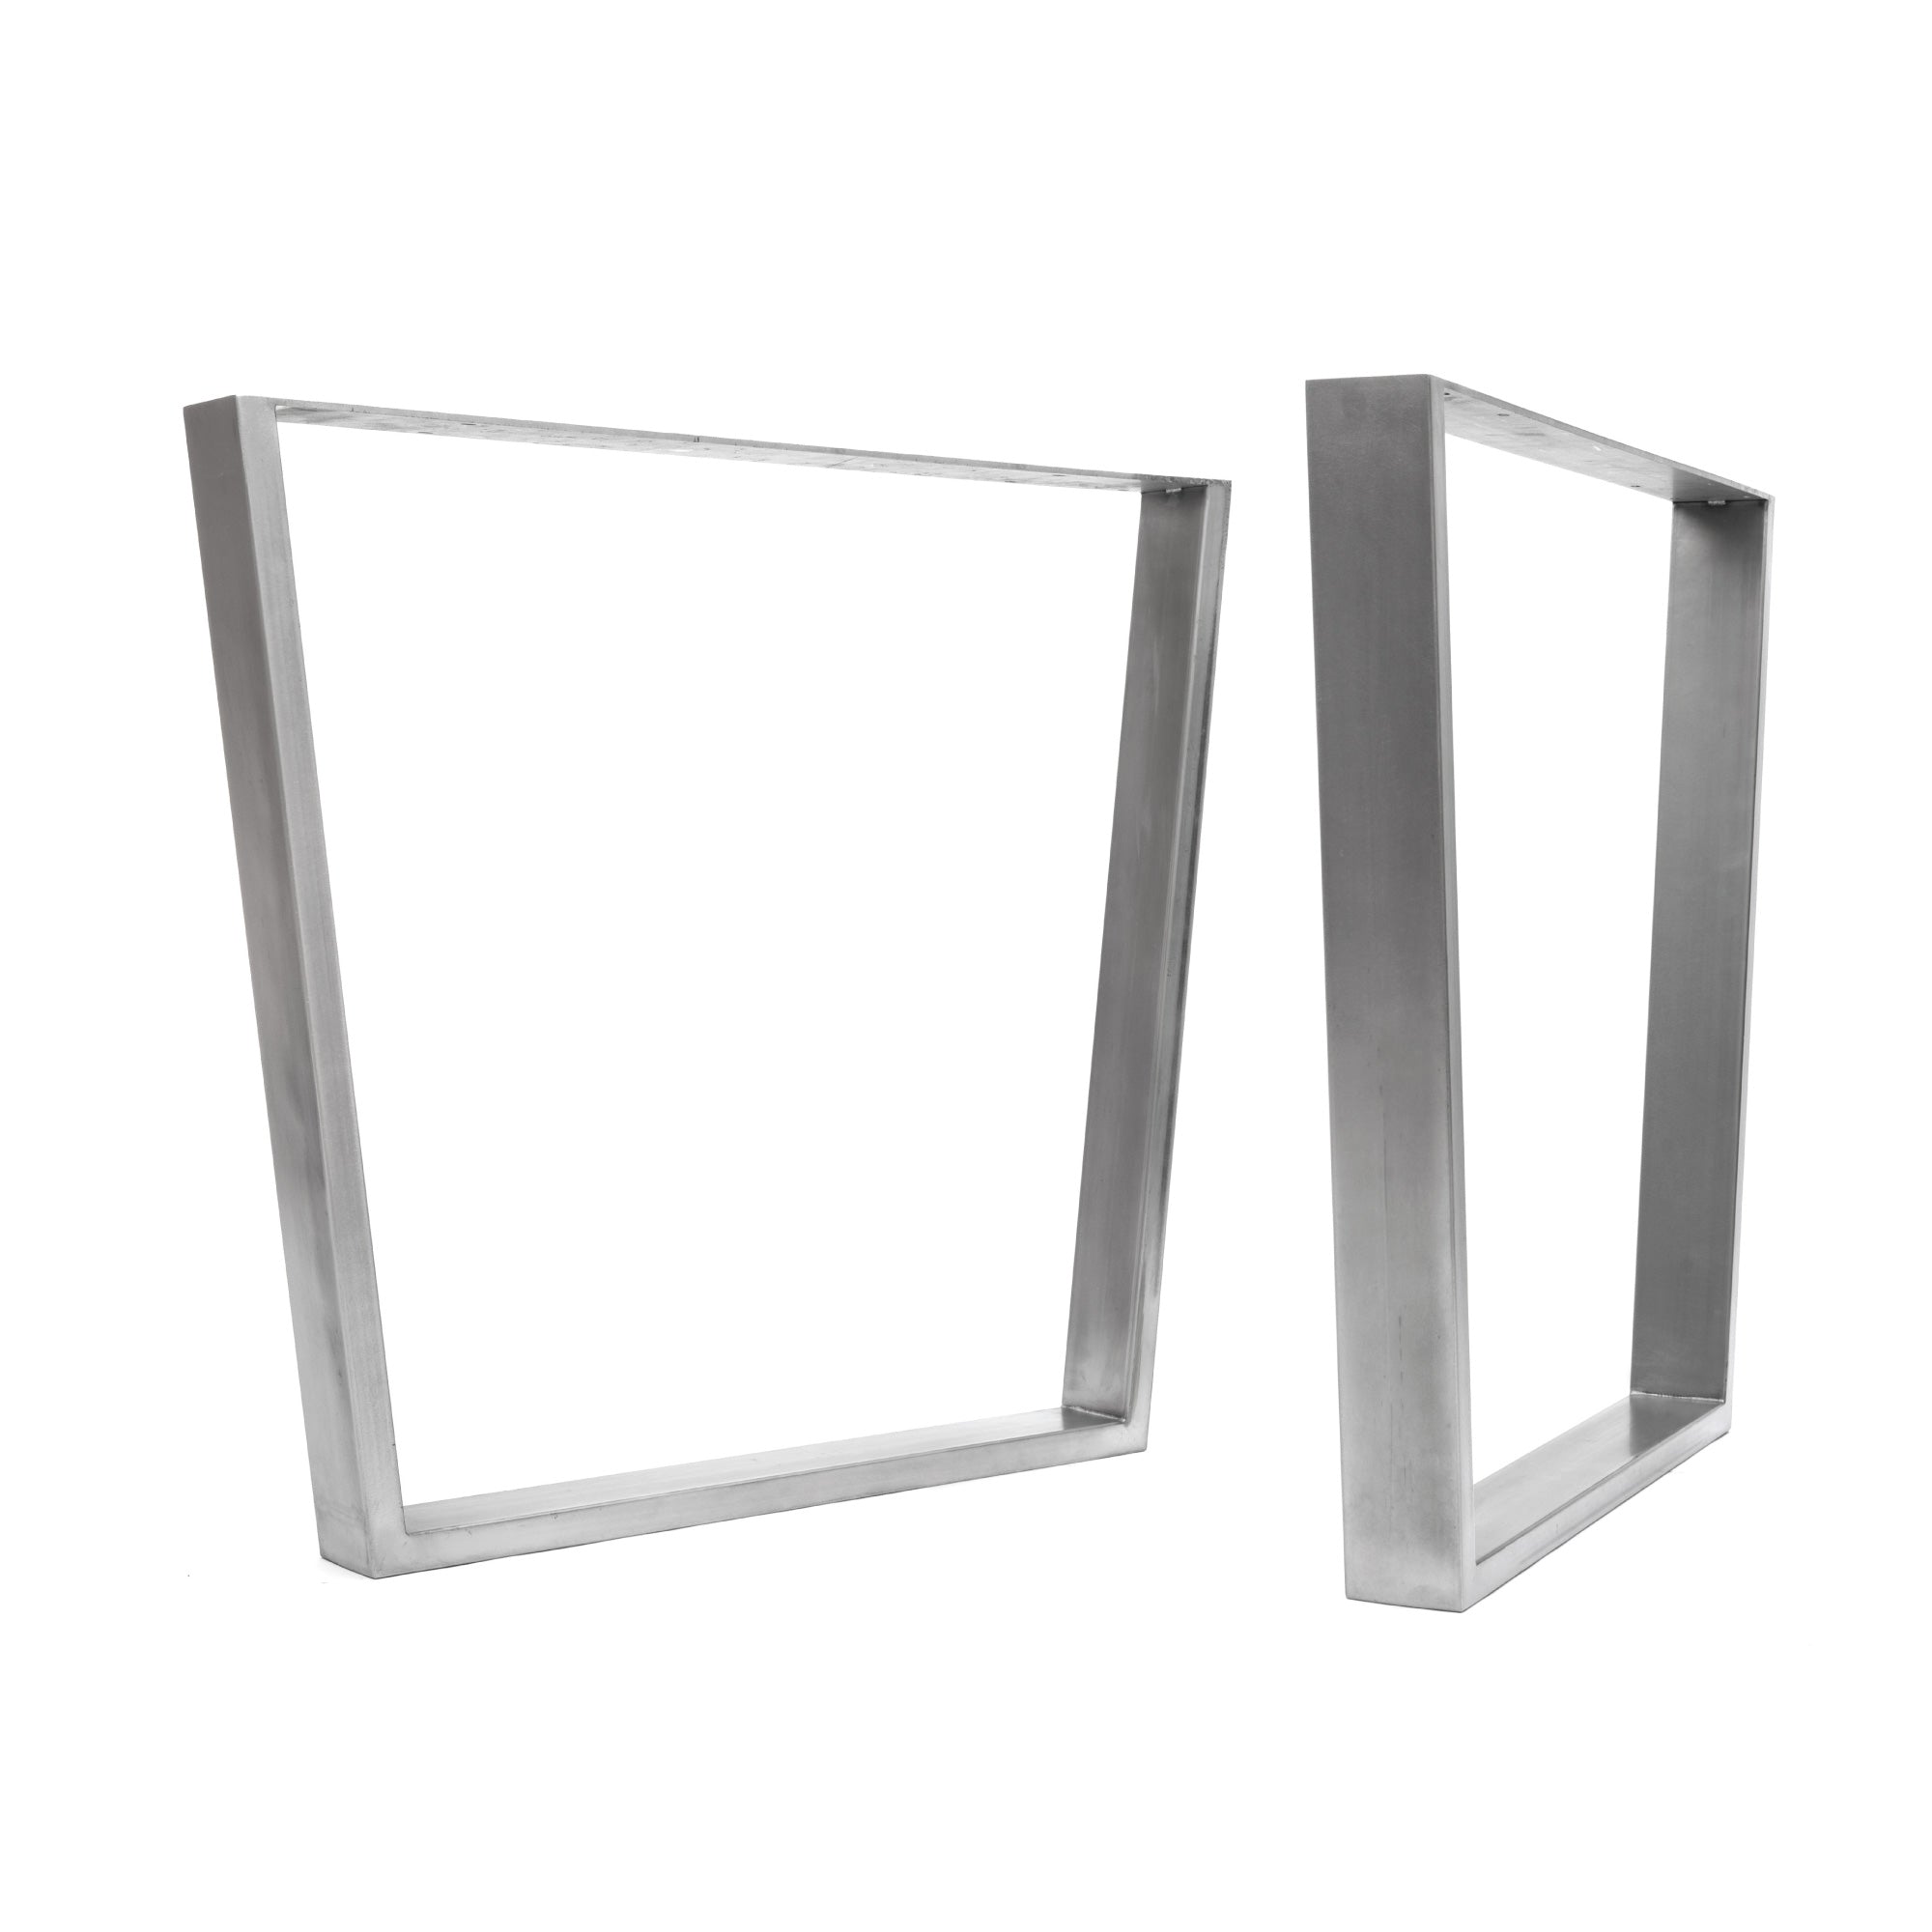 V-Frame Industrial legs | 71cm Table Wide